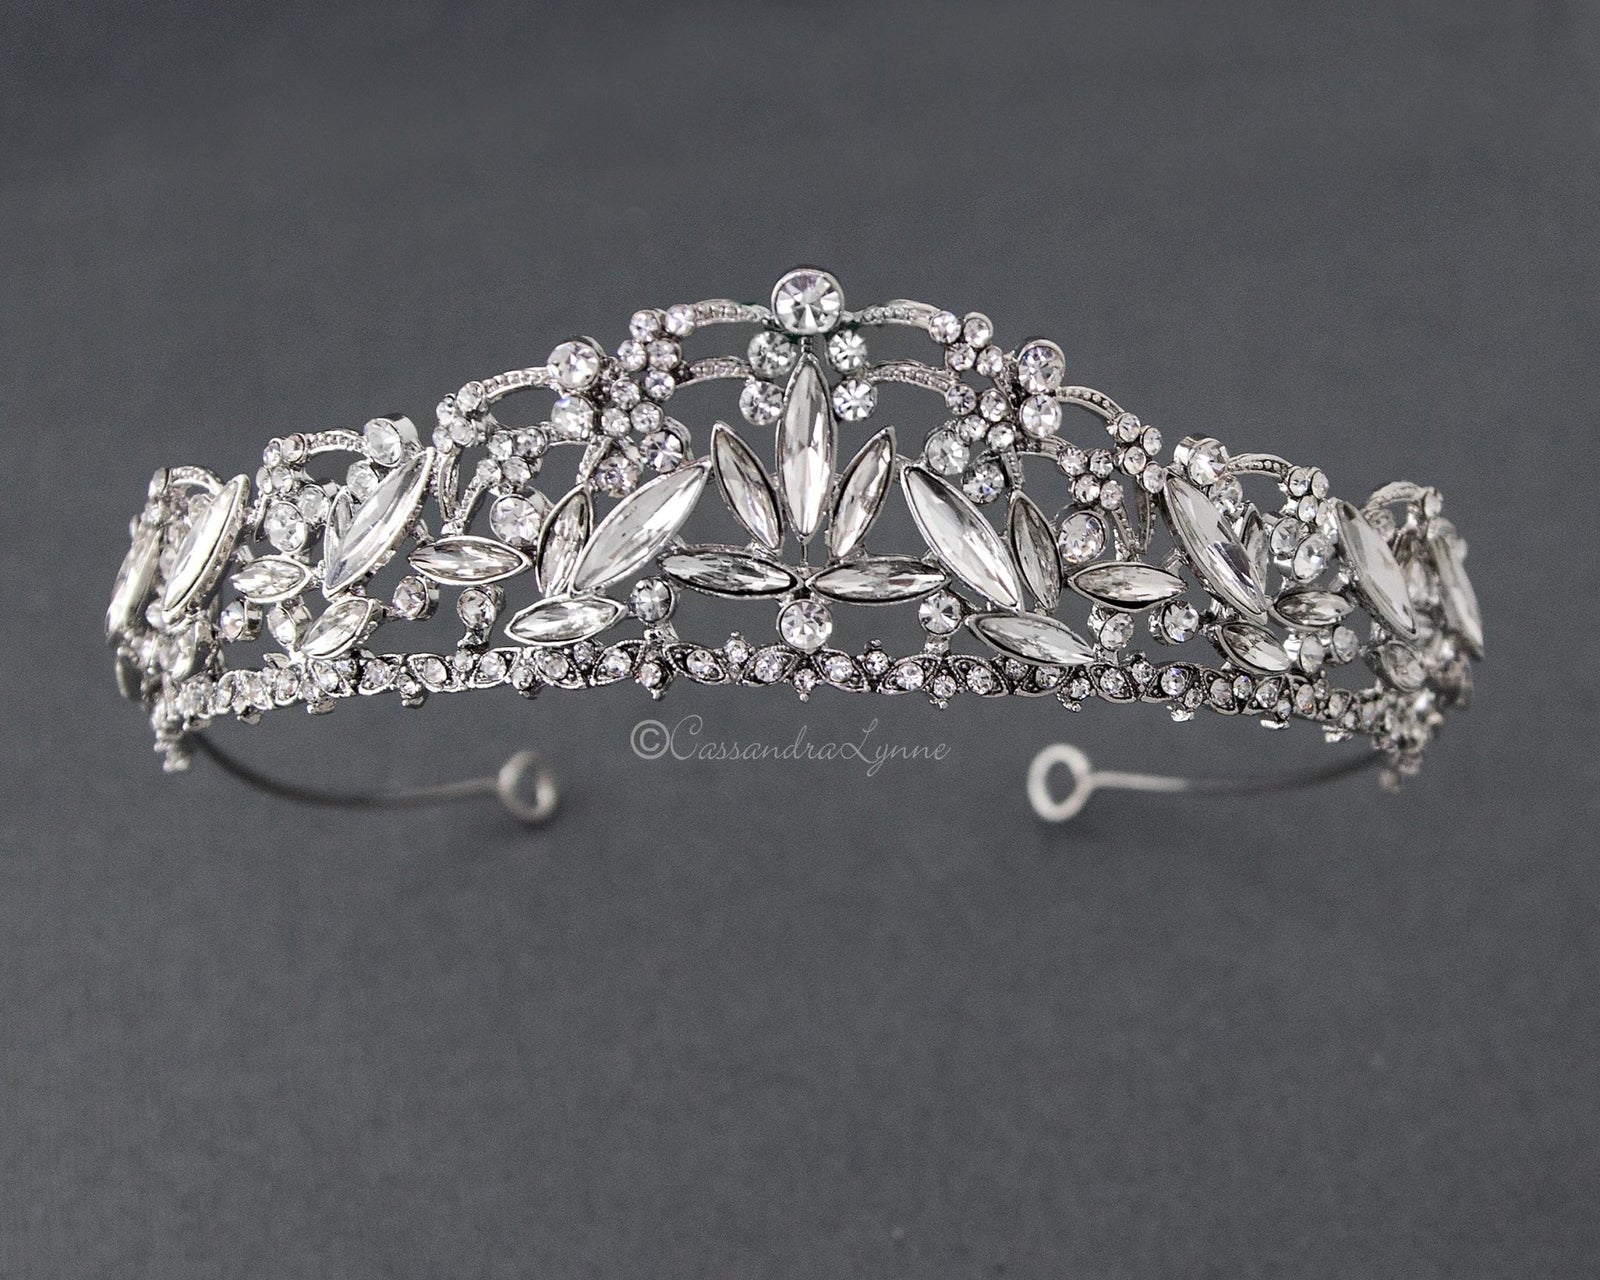 Antique Silver Wedding Tiara - Cassandra Lynne